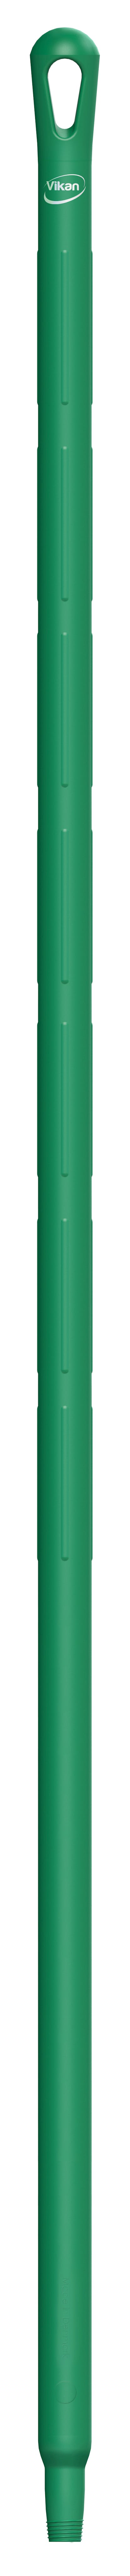 Vikan Ultra Hygiene 29622 groen kunststof steel 150cm